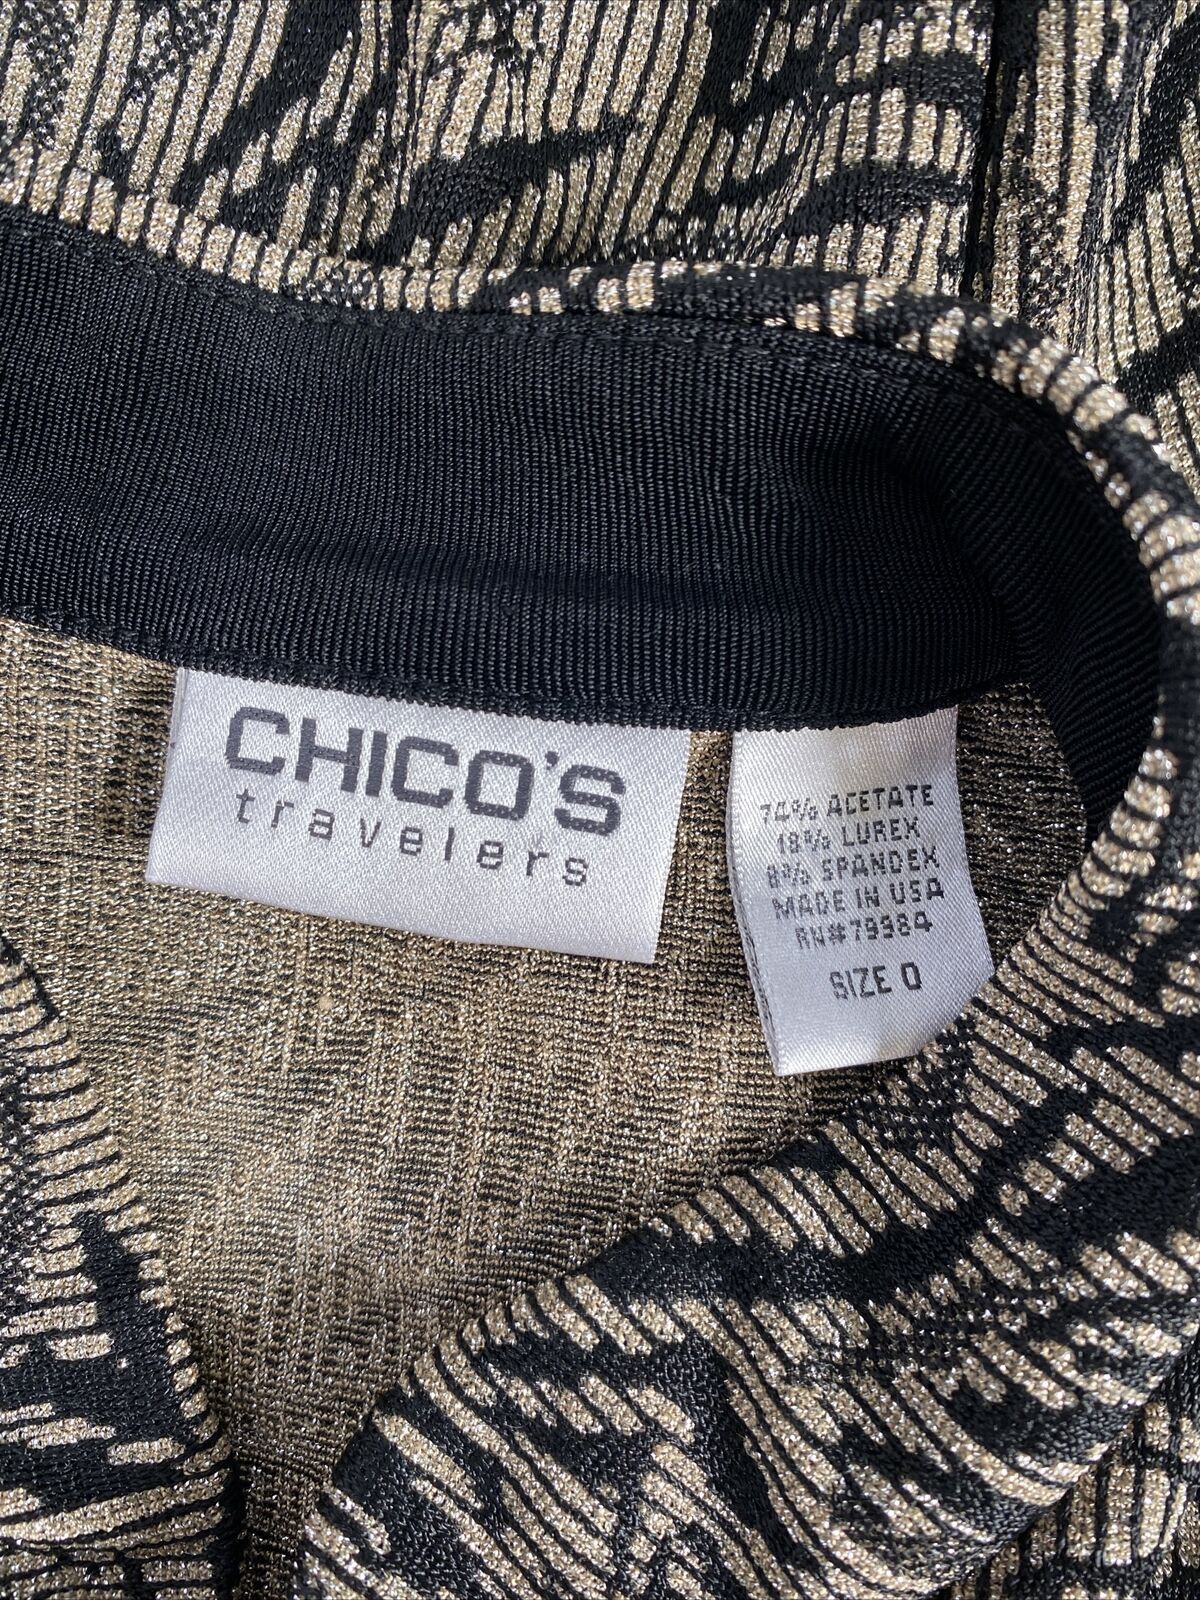 Chico's Travelers Women's Black/Gold Metallic Full Zip Basic Jacket Sz 0